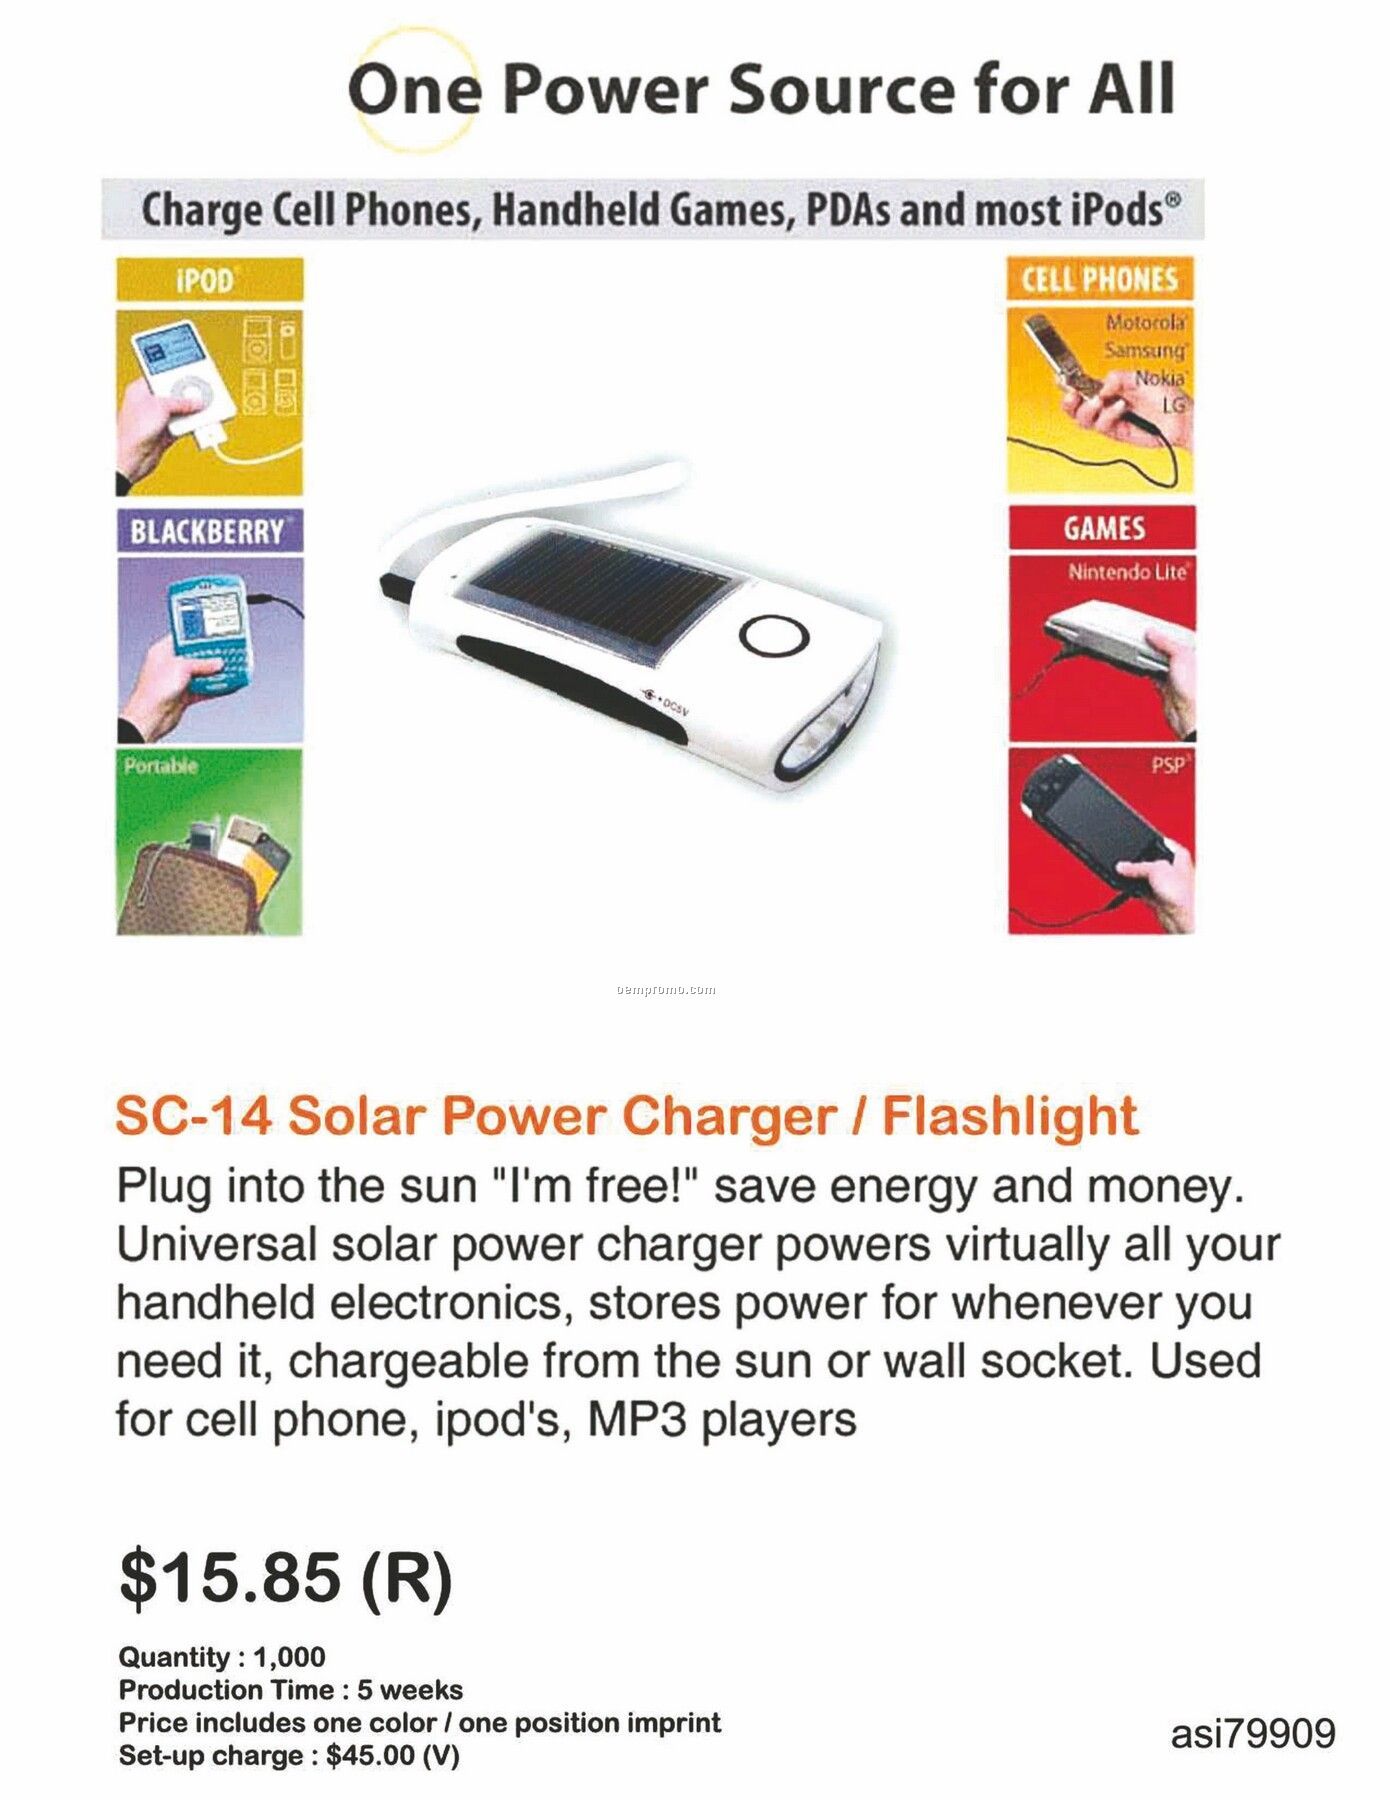 Solar Power Charger / Flashlight